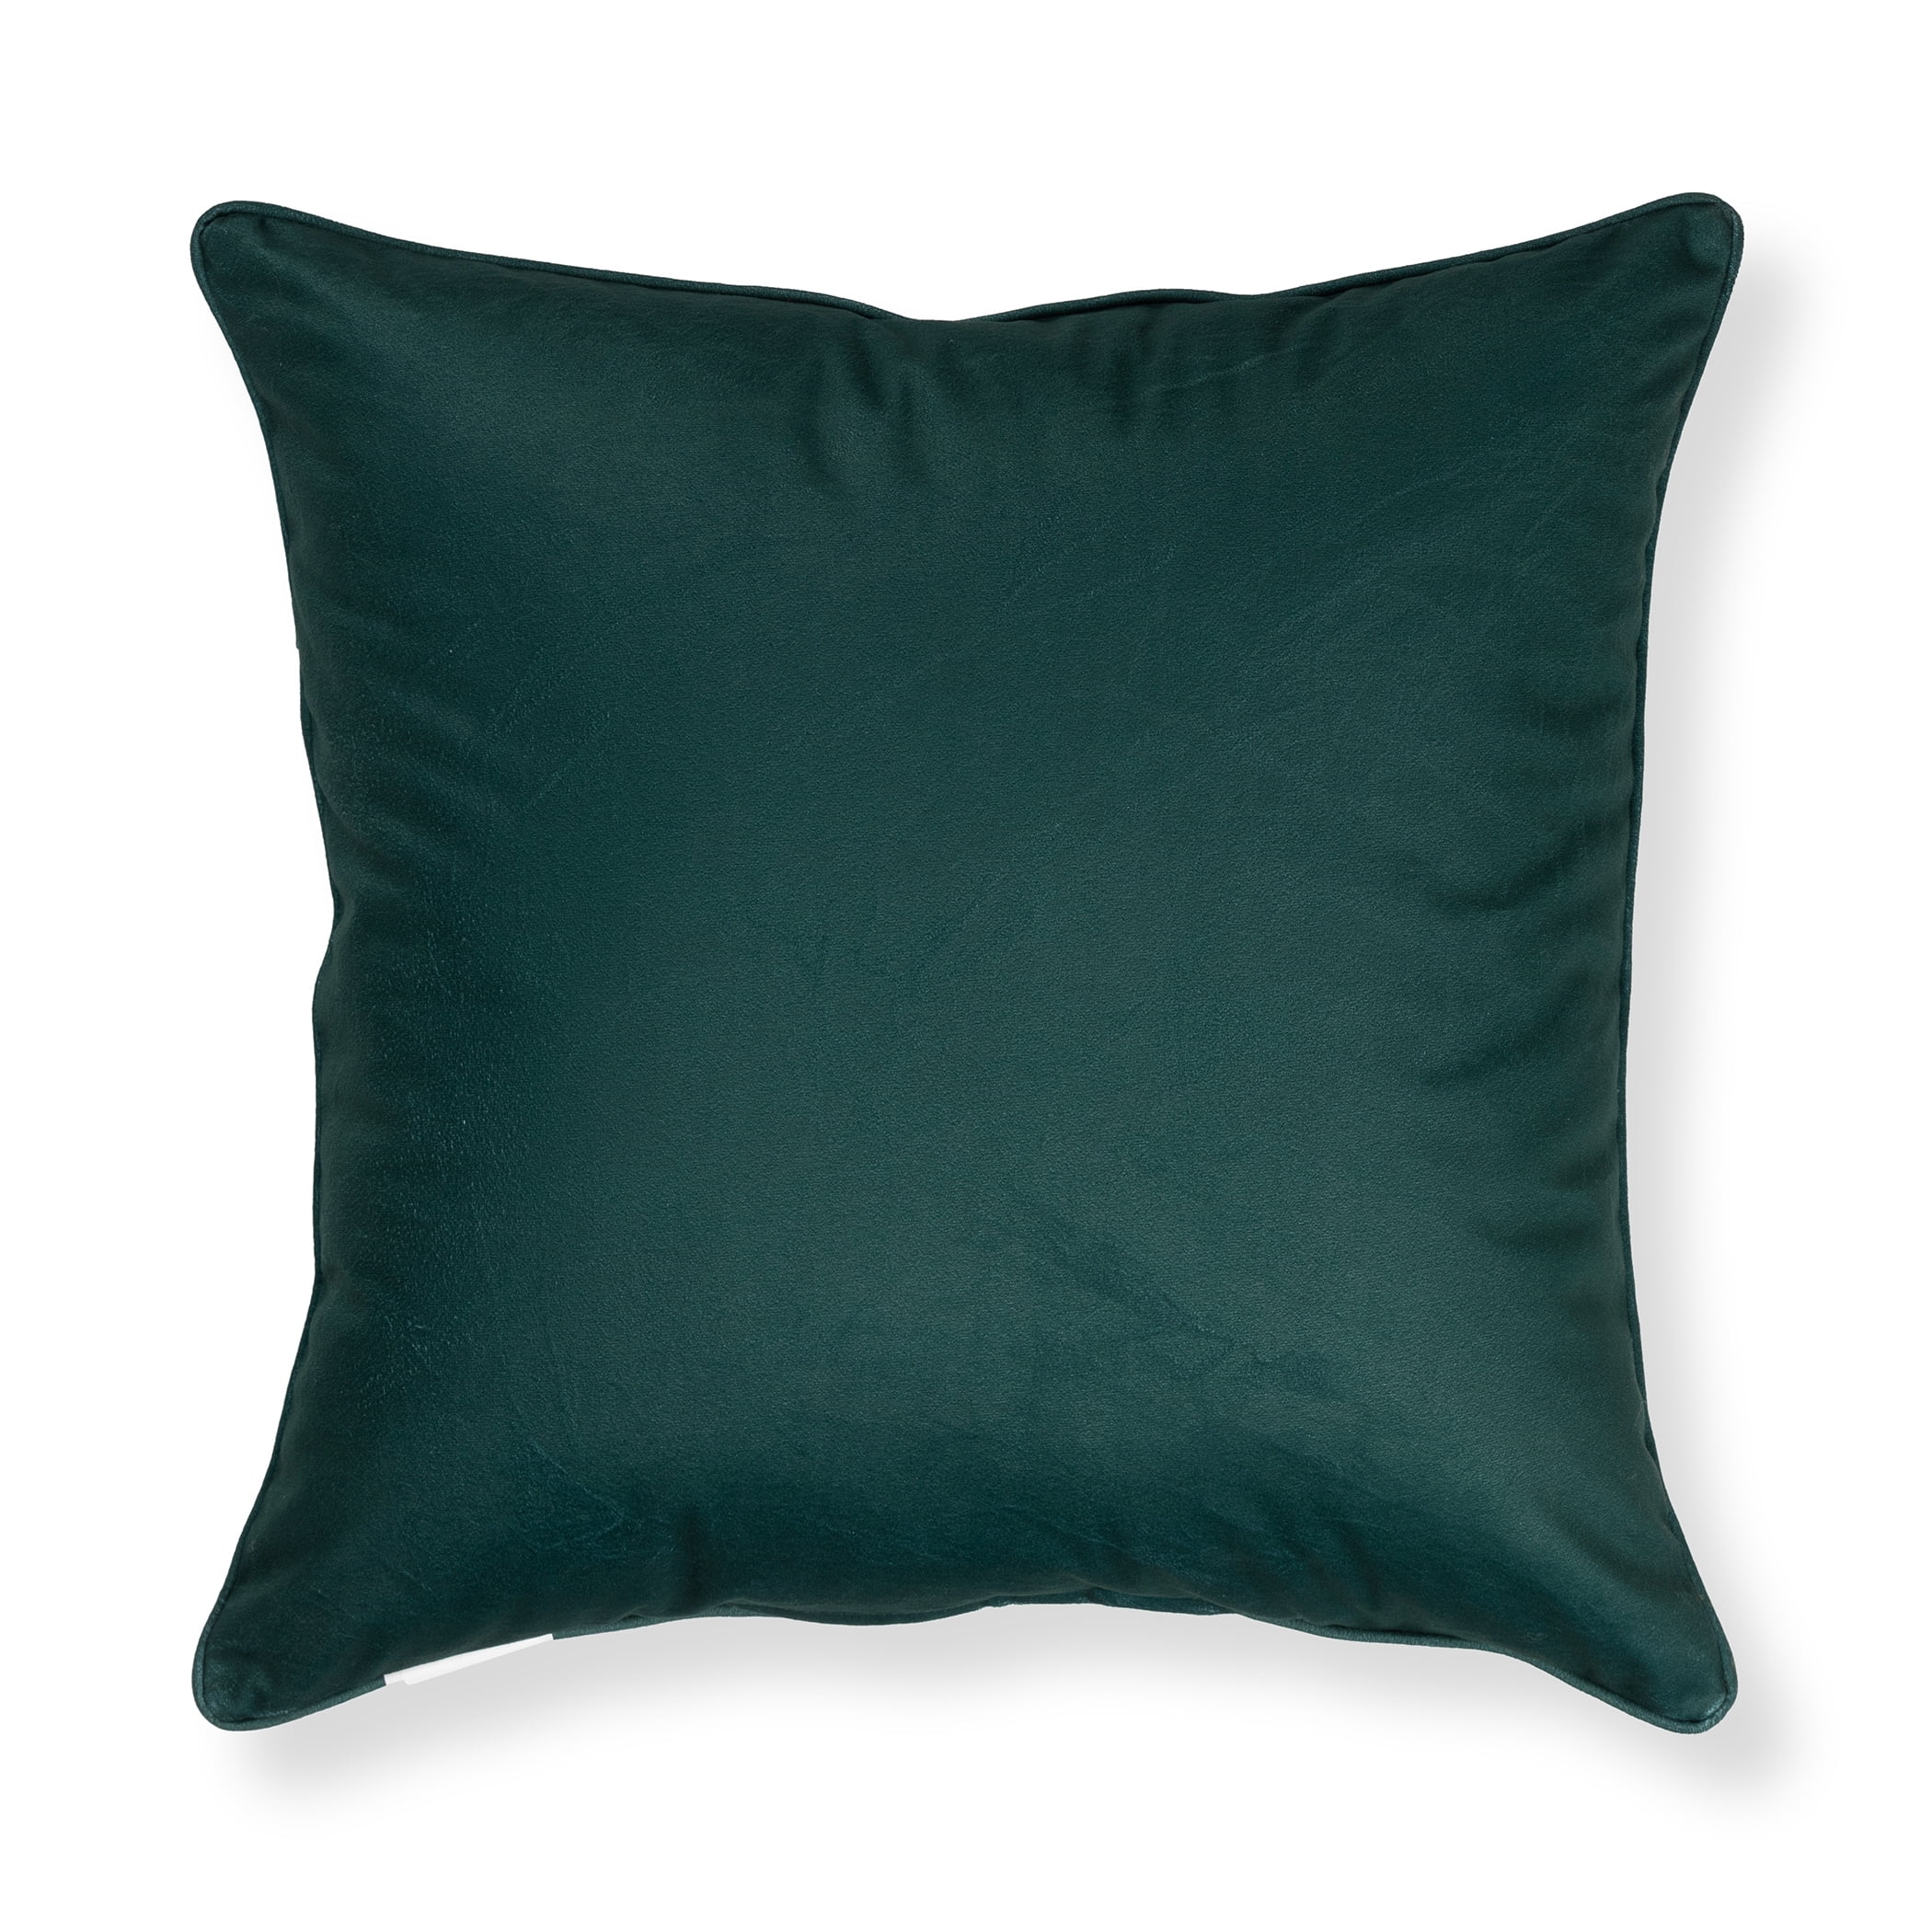 White Linen Fringe Decorative Accent Pillow 20 x 20 – Sovrano Home Décor